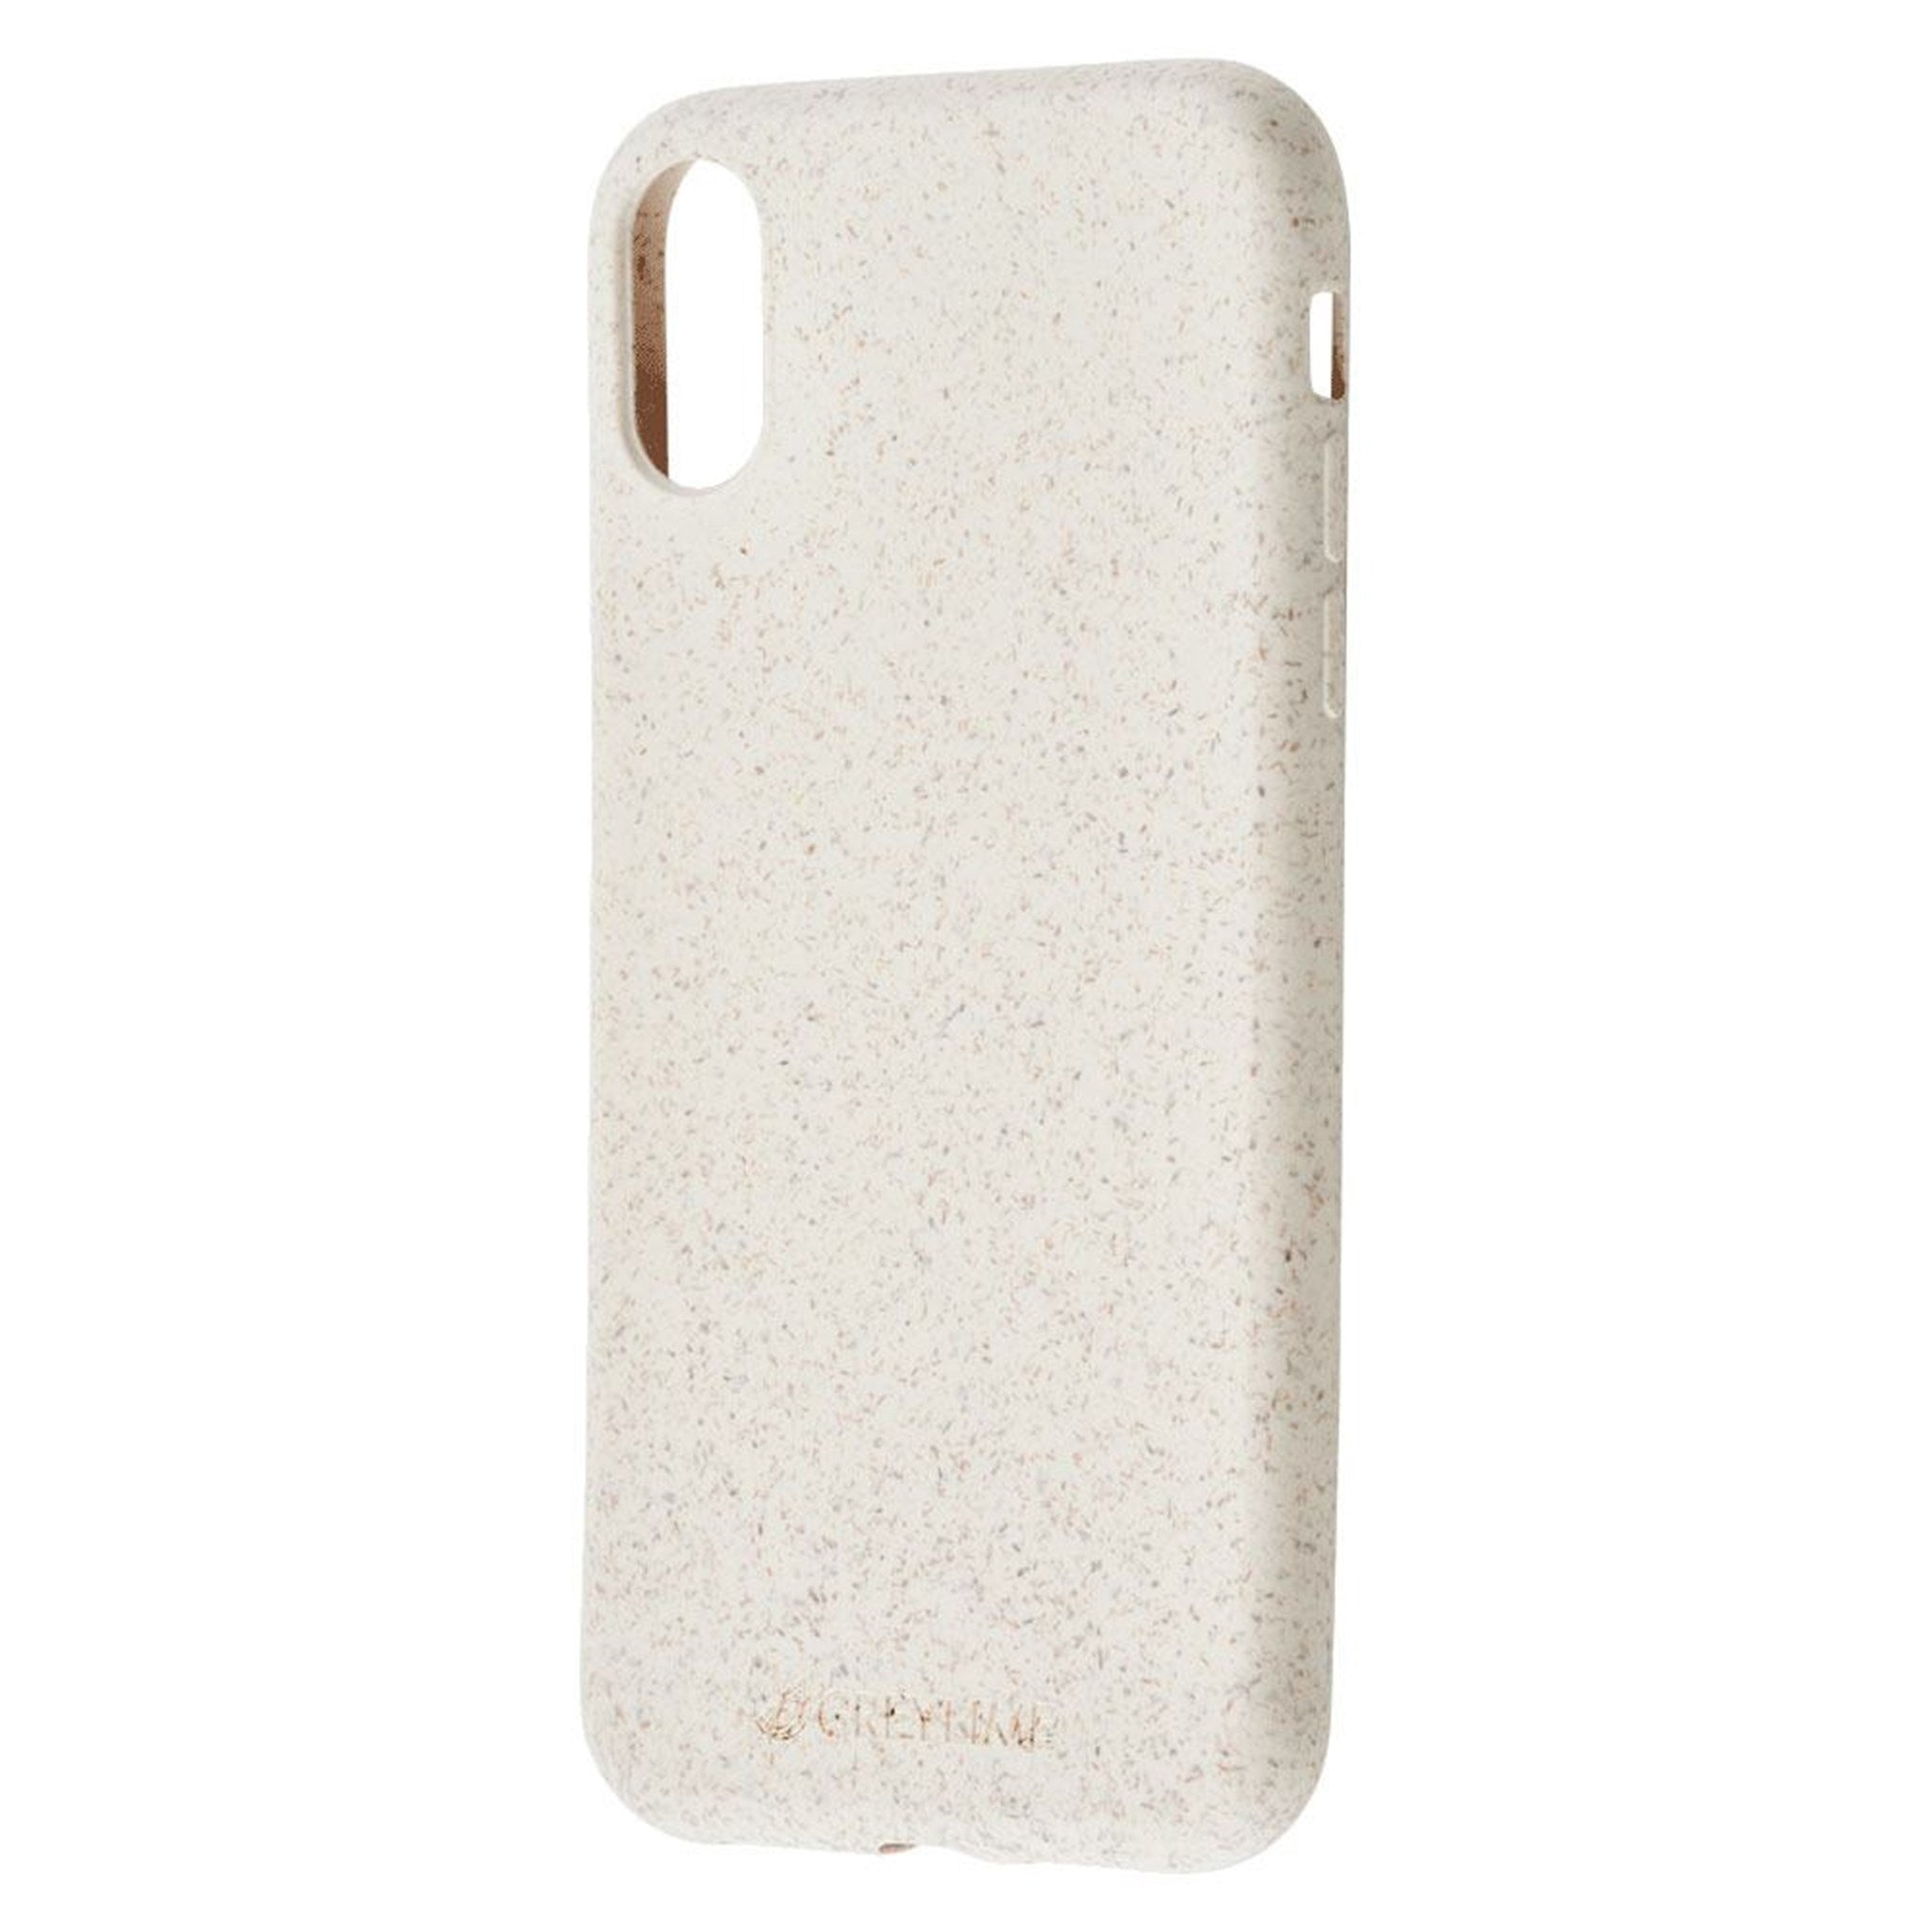 GreyLime-iPhone-XR-biodegradable-cover-Beige-COIPXR02-V2.jpg